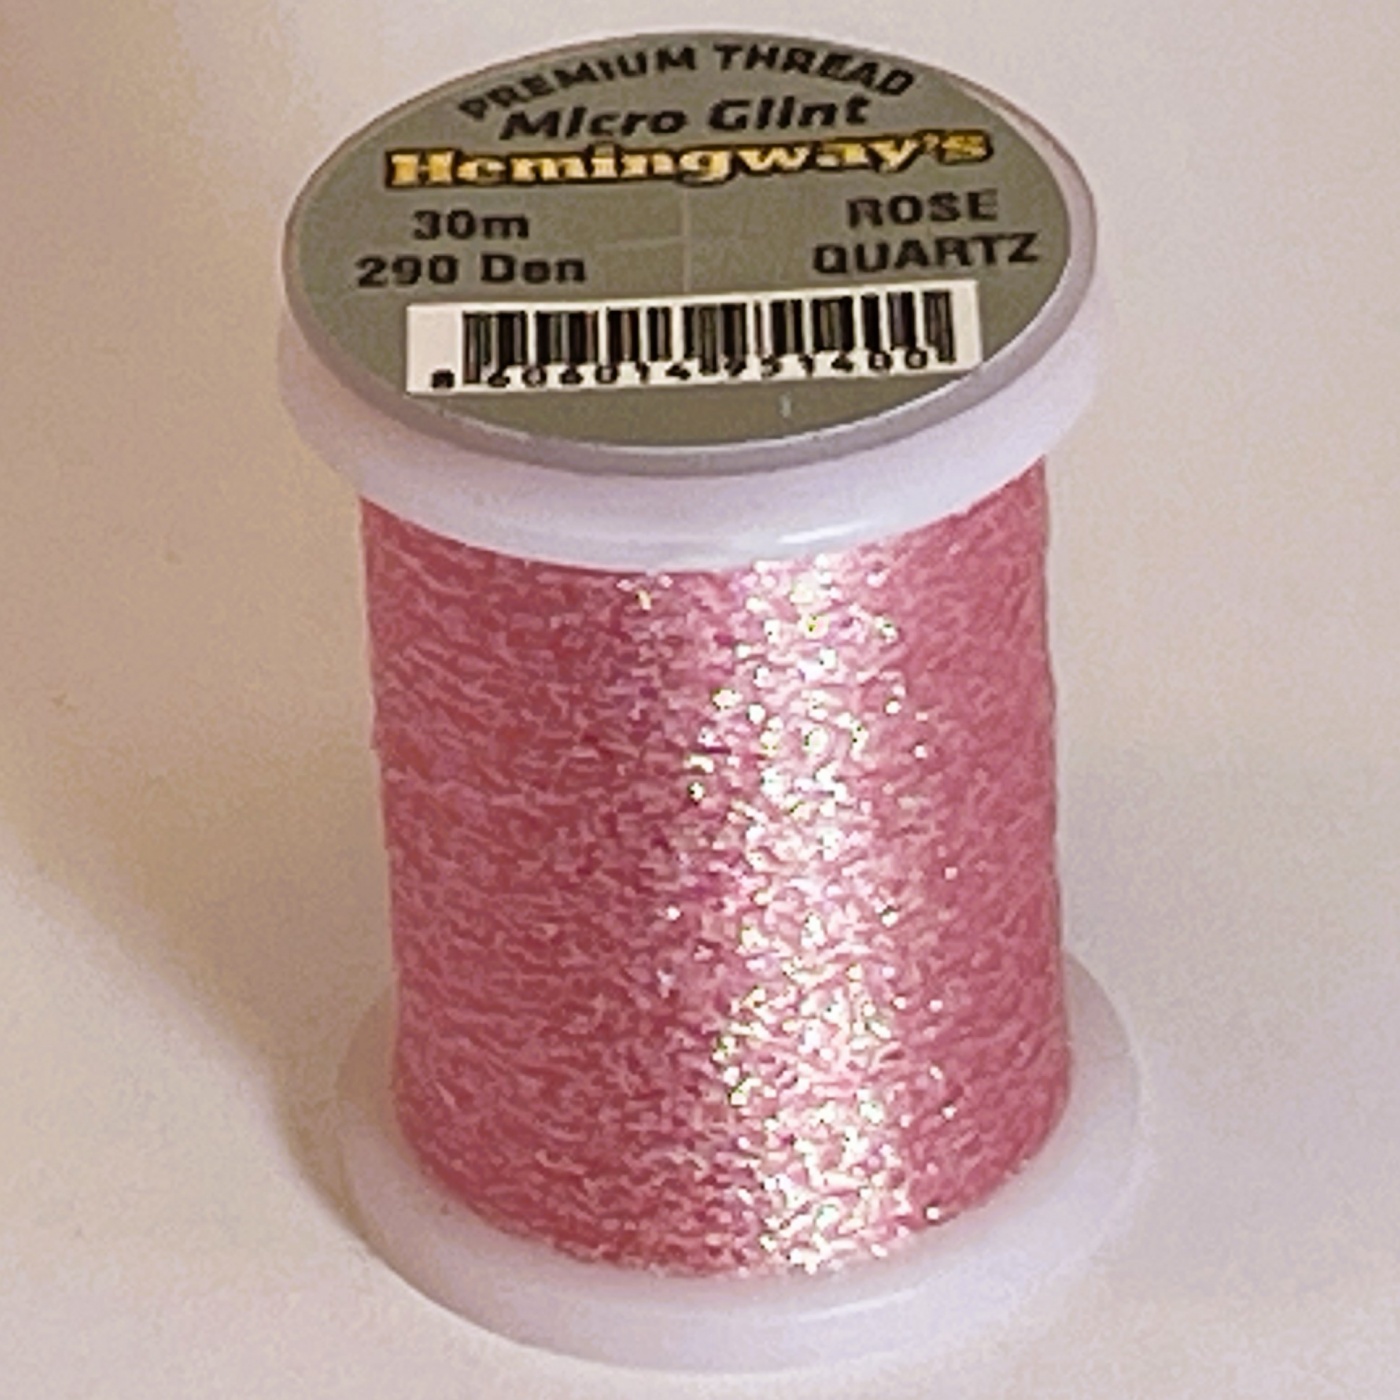 Hemingway's Micro Glint Rose Quartz Fly Tying Materials (Product Length 32.8 Yds / 30m)